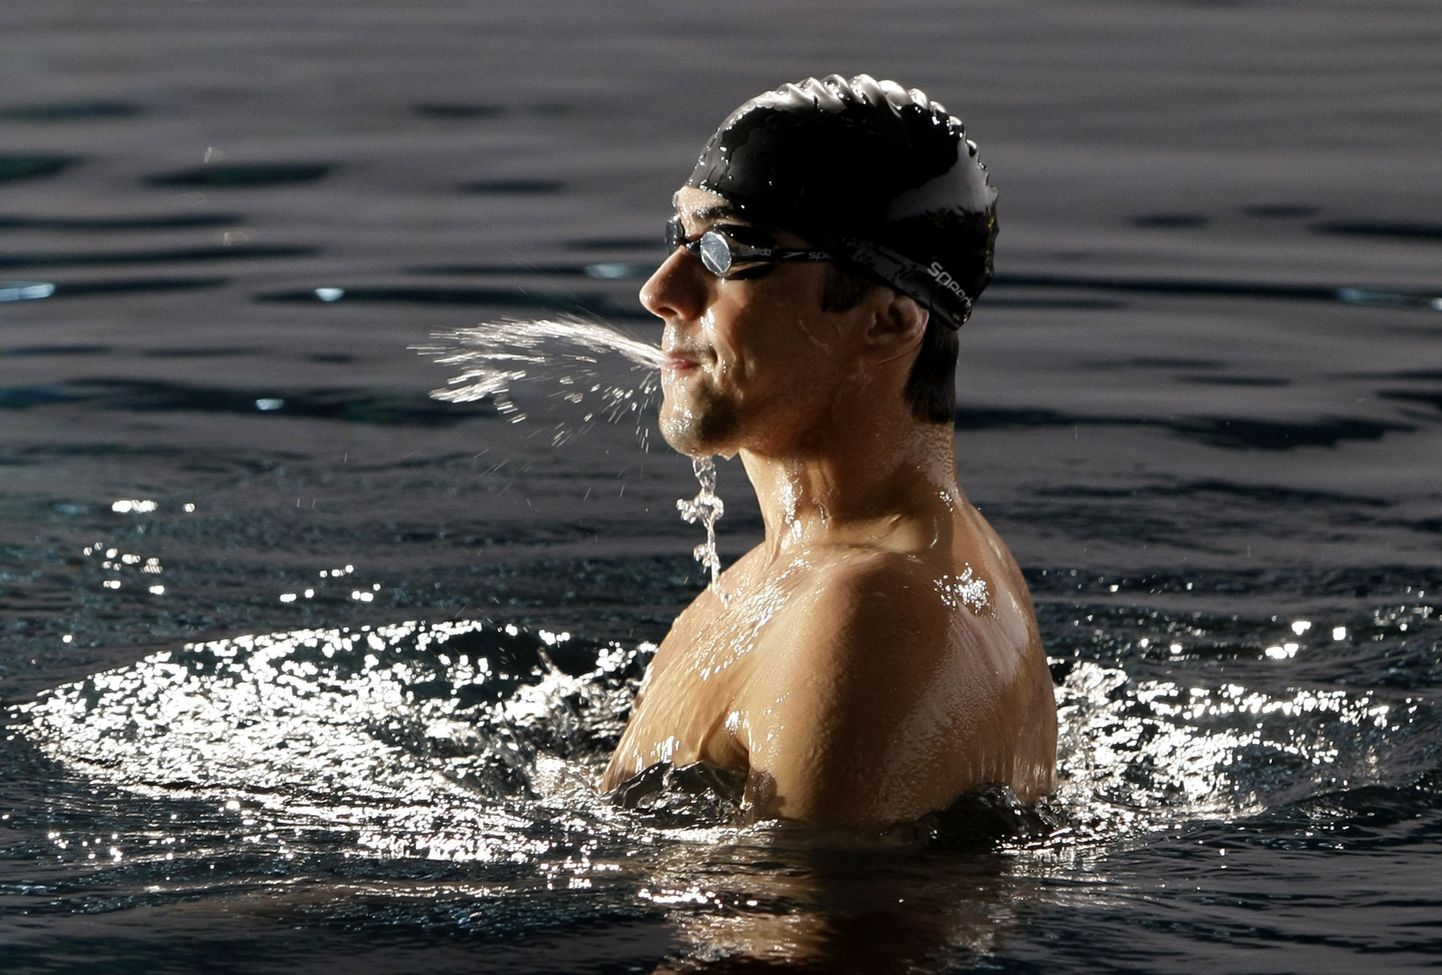 USA imeujuja Michael Phelps